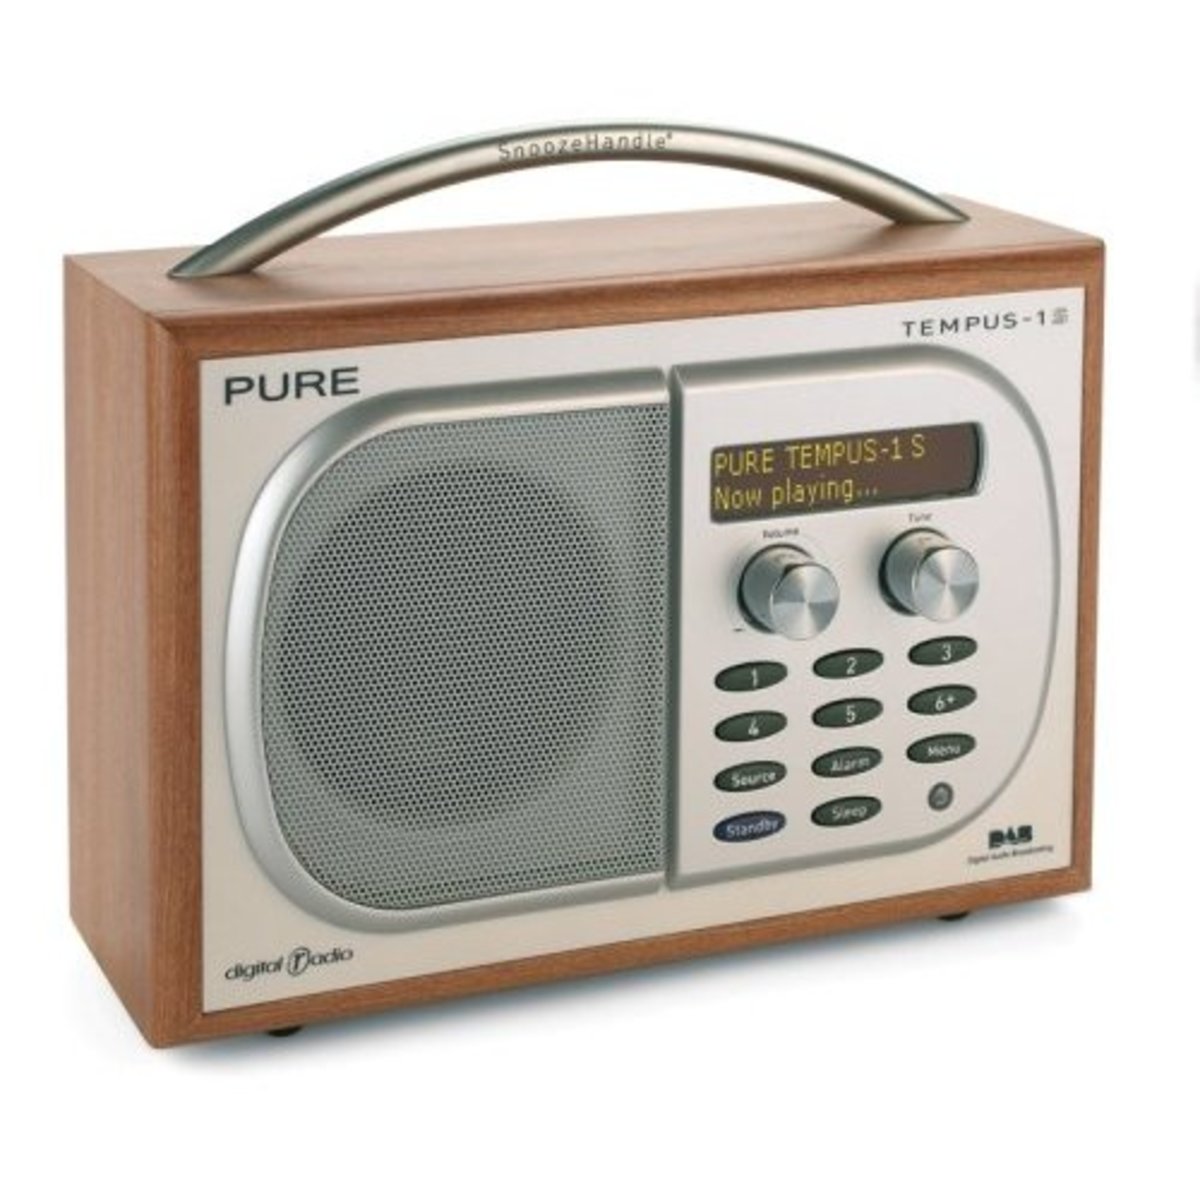 Portable DAB digiital and FM radio